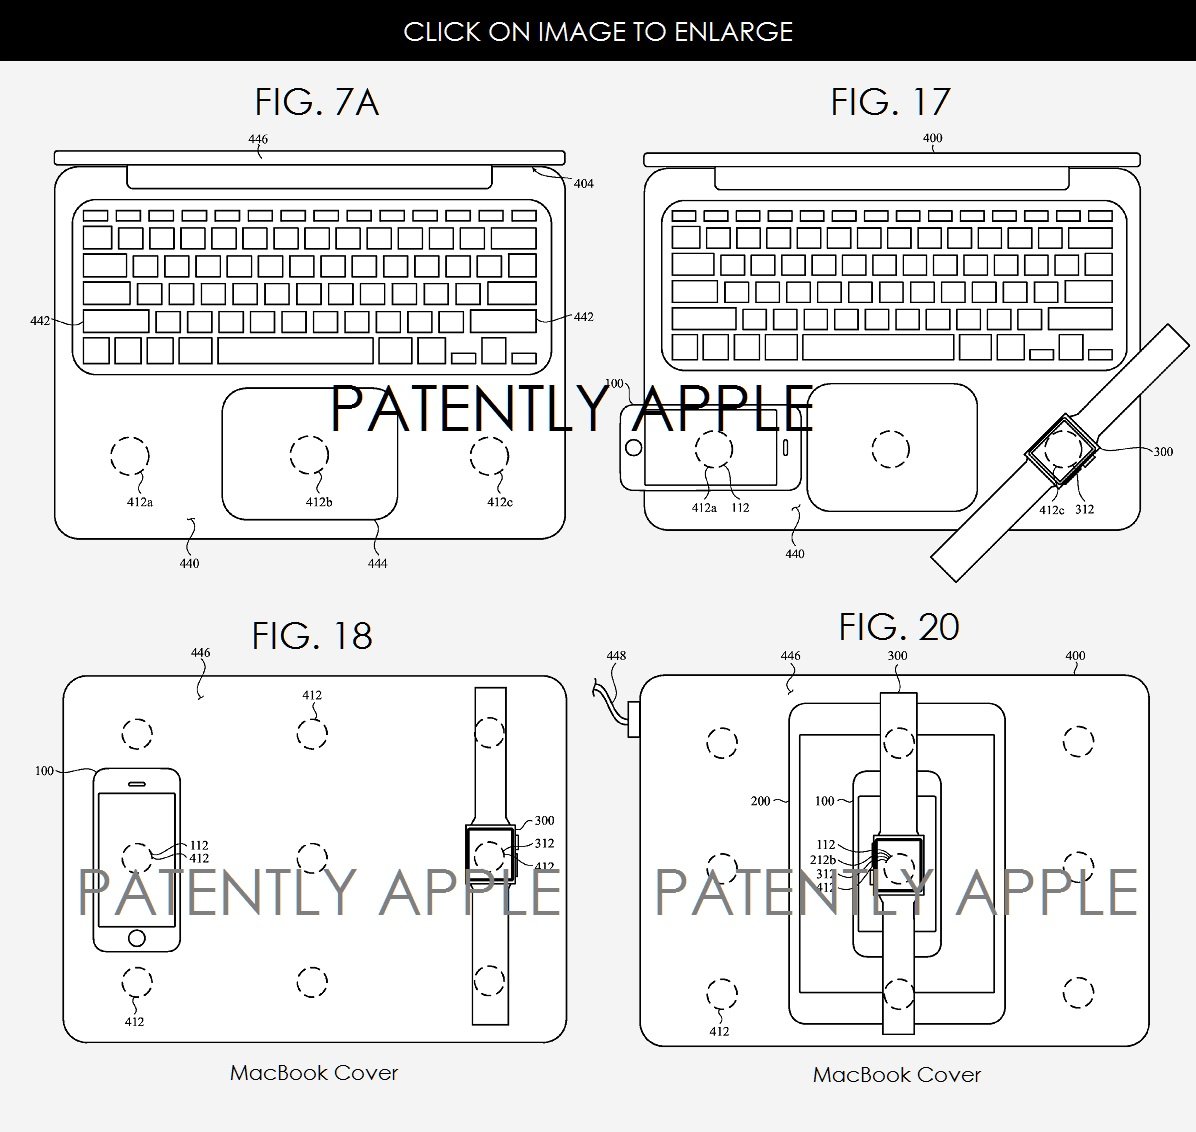 MacBook wireless charging patent image